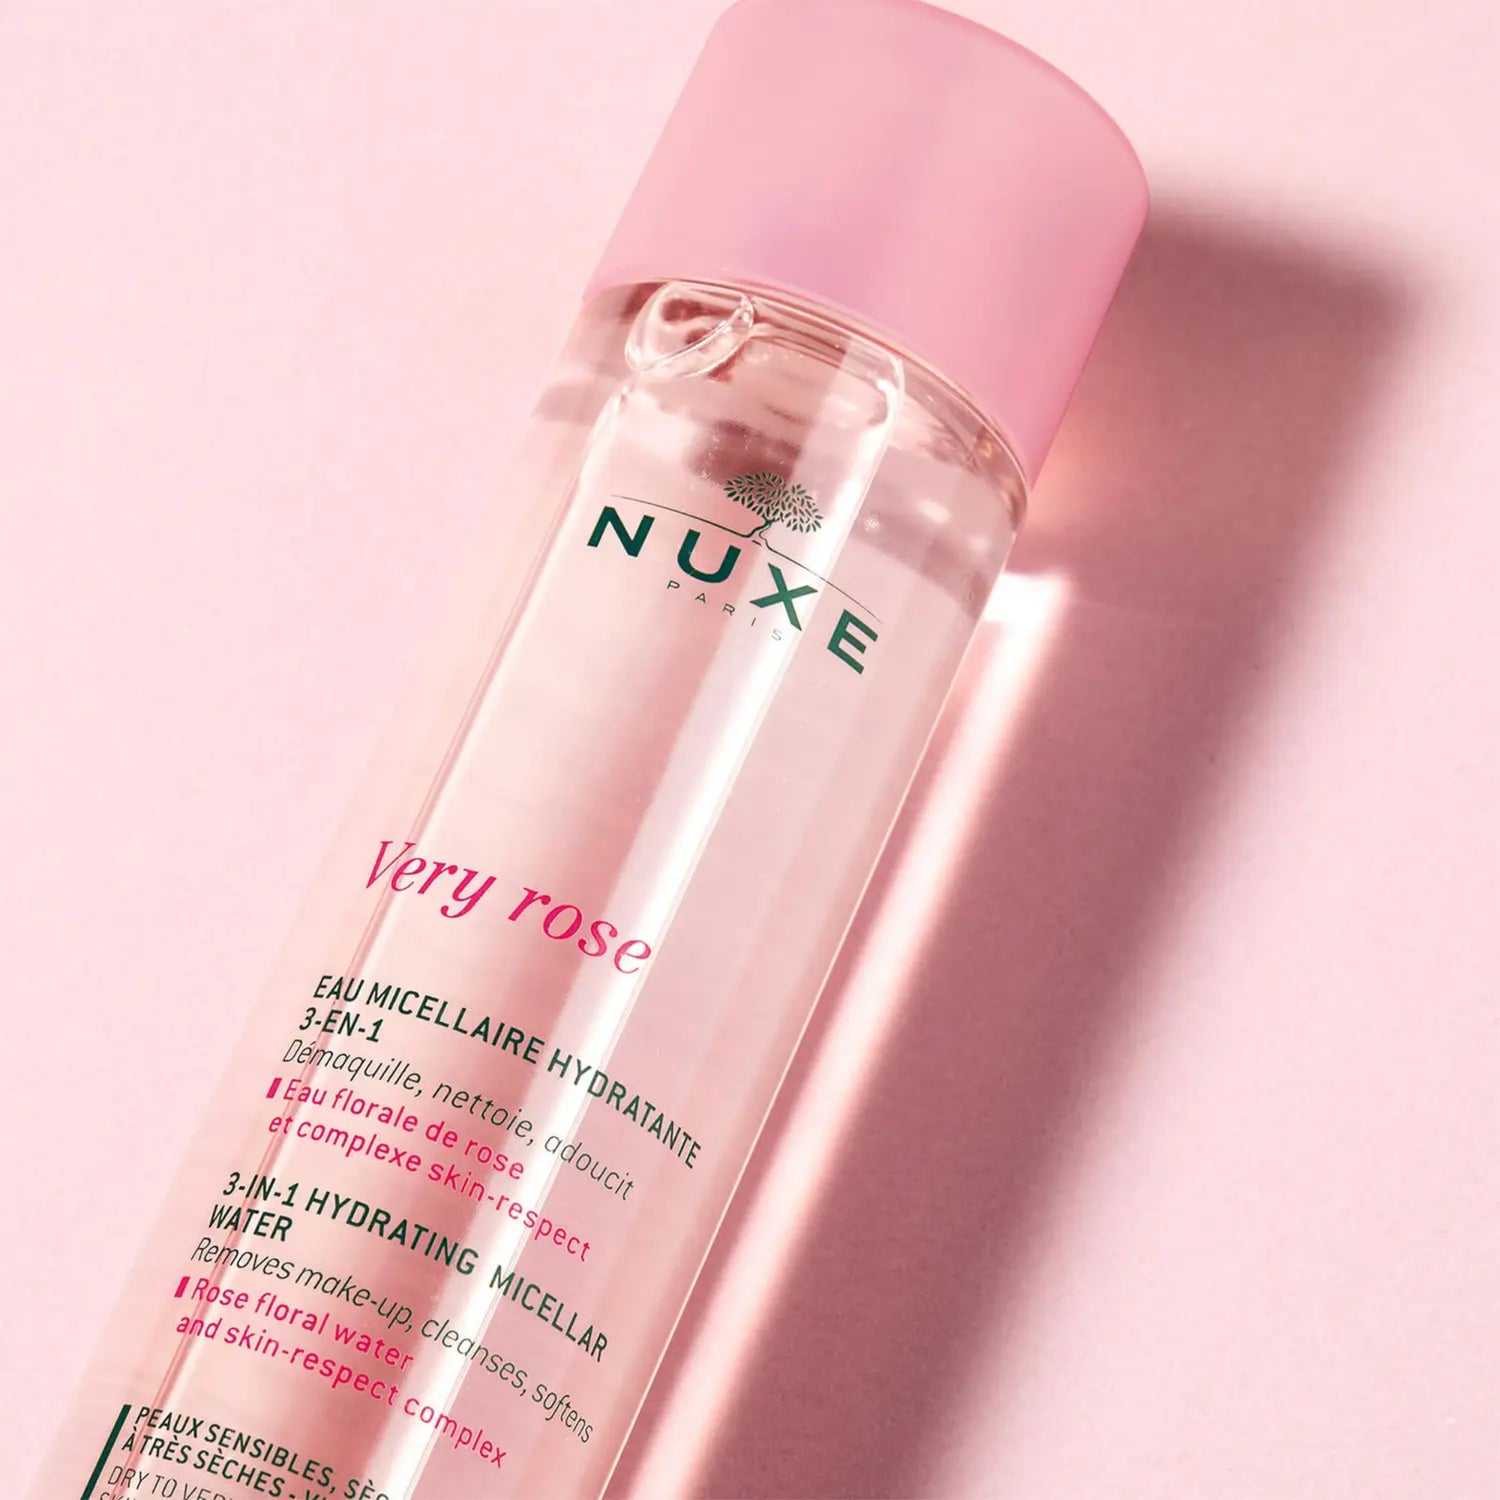 Nuxe - Very Rose - Agua Desmaquillante Micelar  200 ml - ebeauty